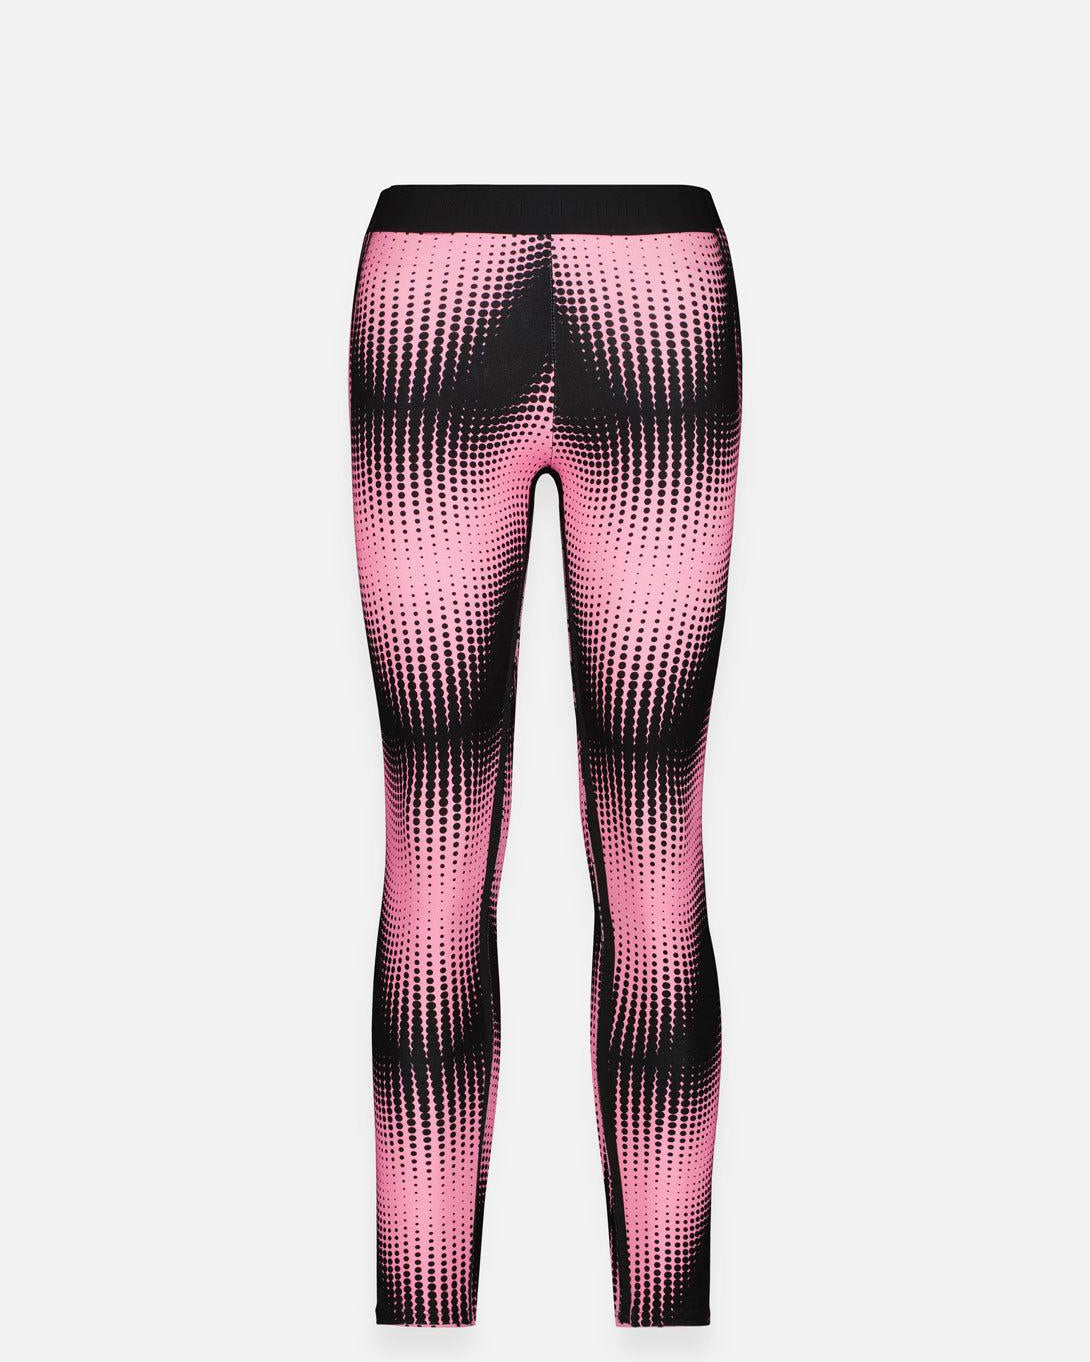 Pink echo pants - Activewear - Paco Rabanne - Elevastor